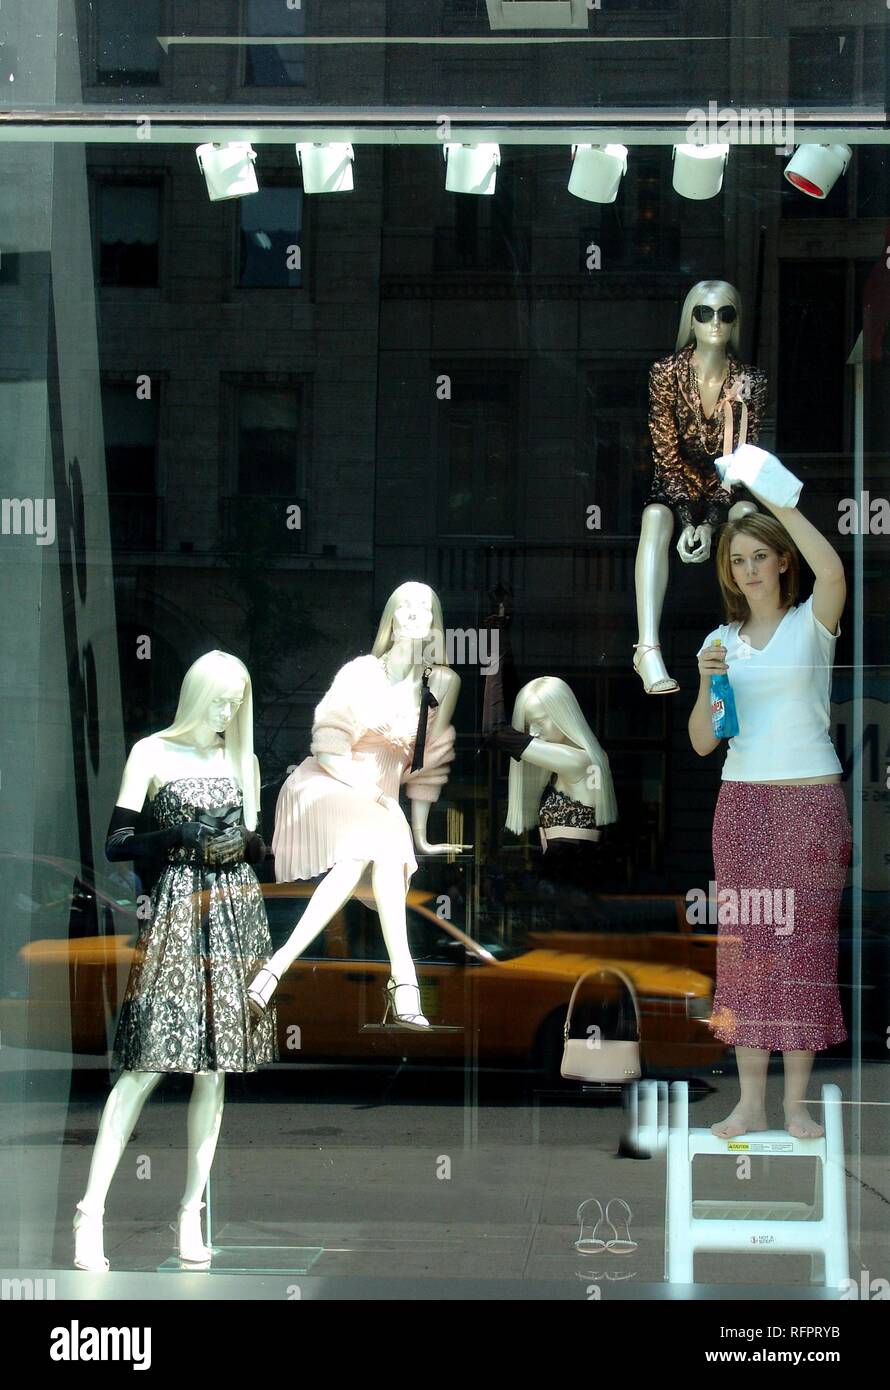 USA, United States of America, New York City: Escada fashion shop on Fifth Avenue. Stock Photo